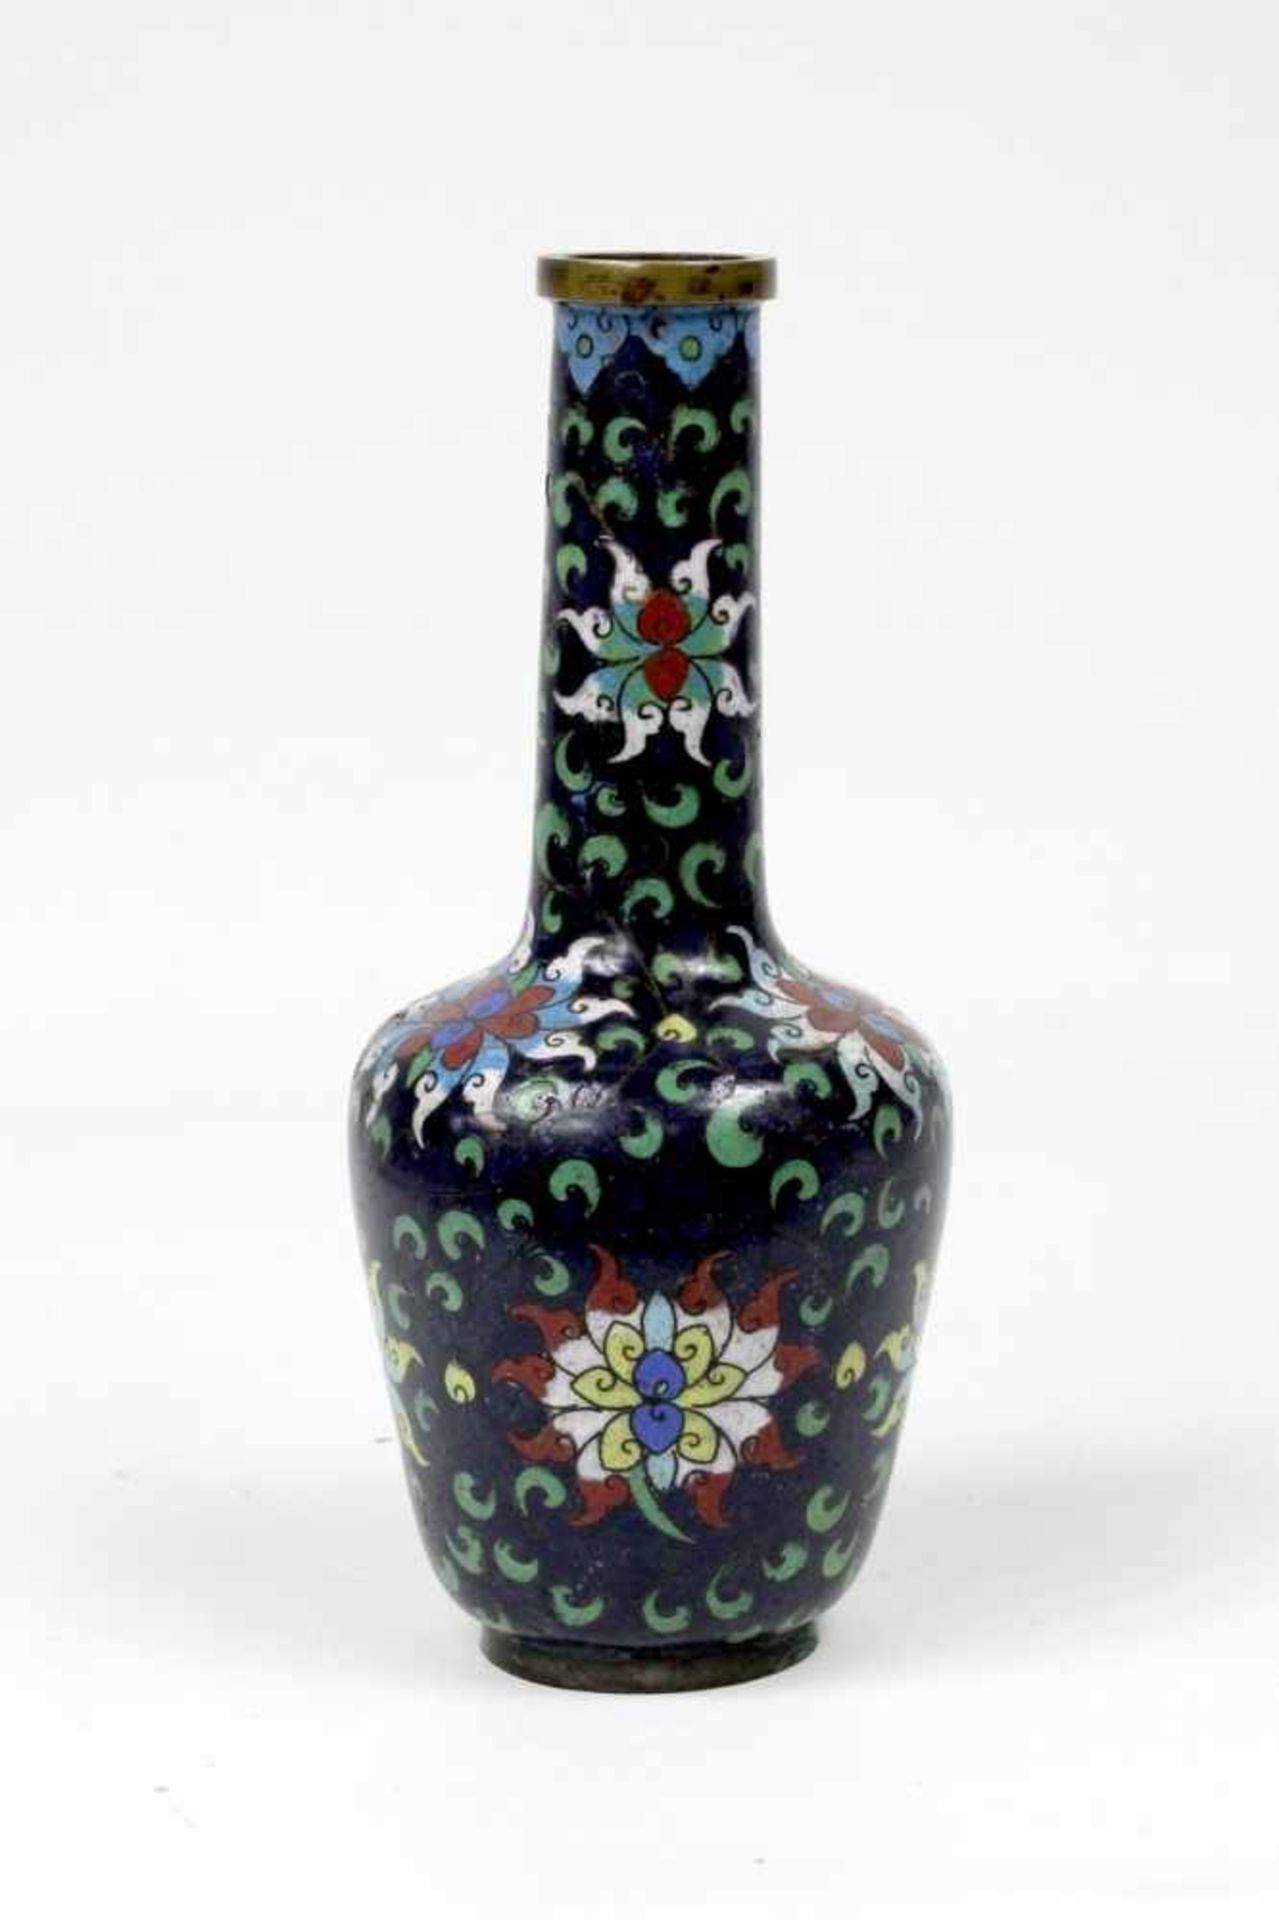 China Blaue Cloisonne-Chrysanthemen Vase frühe Qing Dynastie 17.Jhdt.< - Bild 4 aus 5